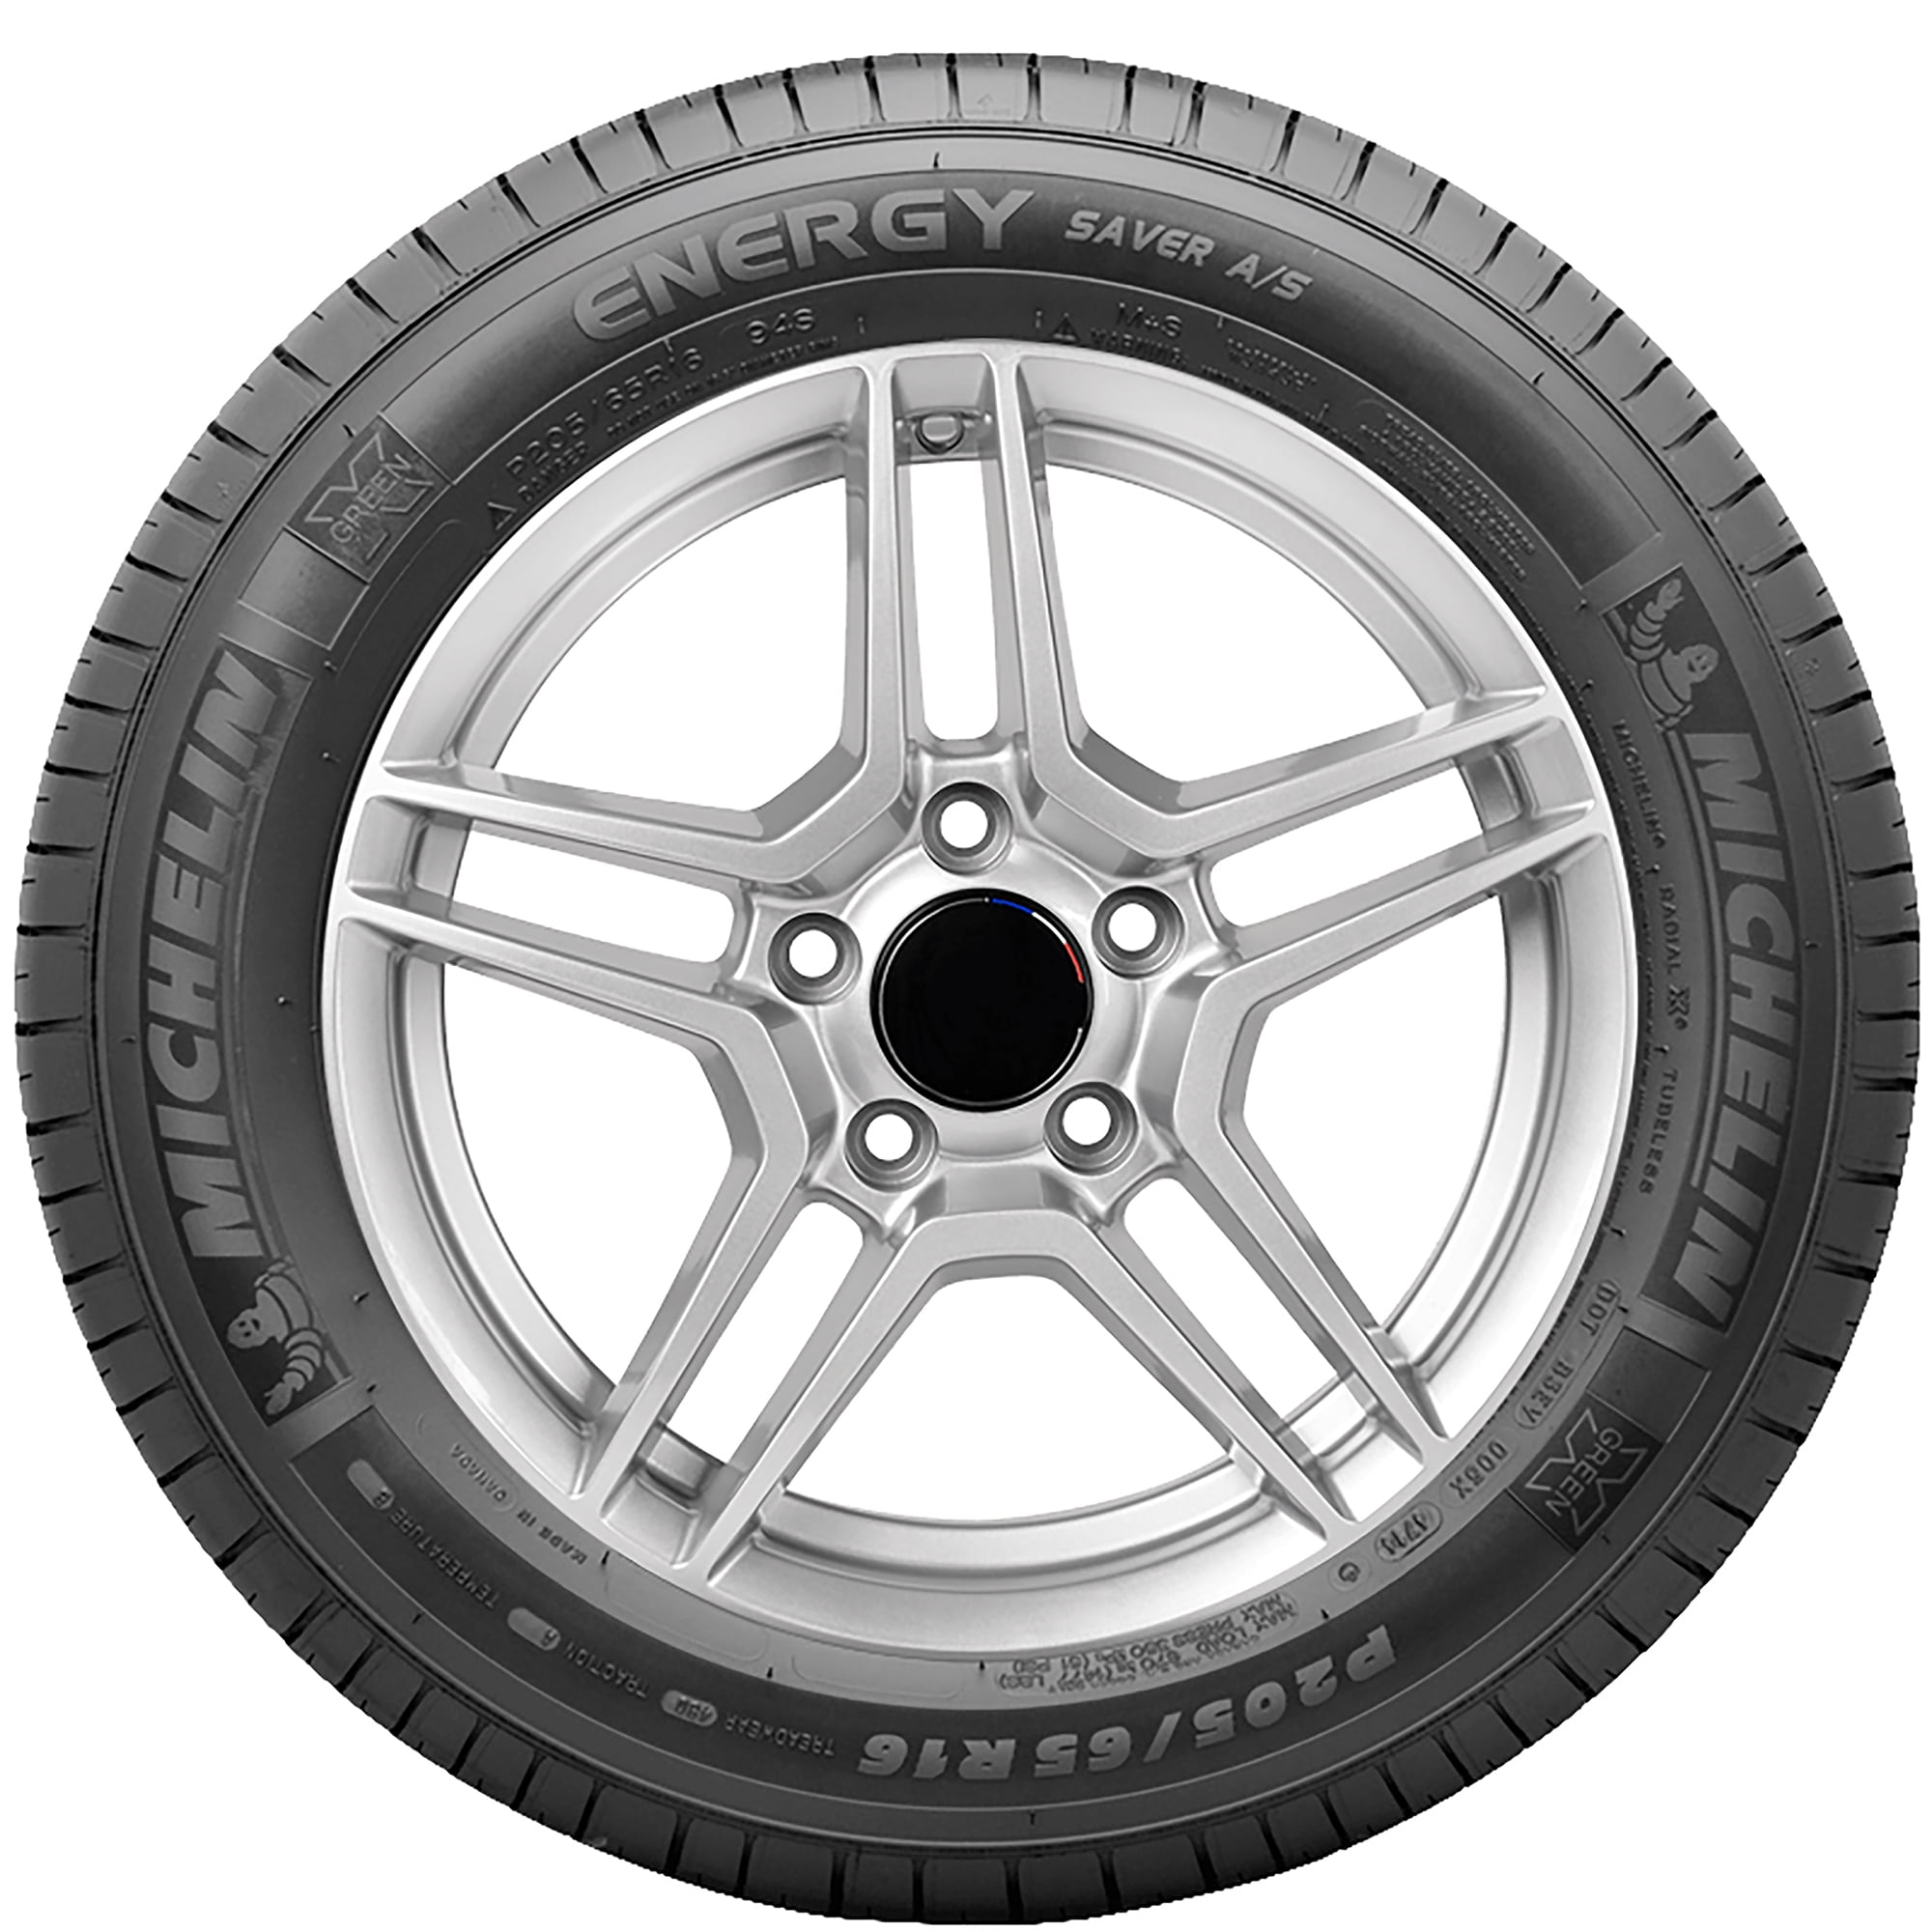 Michelin Energy Saver A/S All-Season 195/65R15 91T Tire - Walmart.com